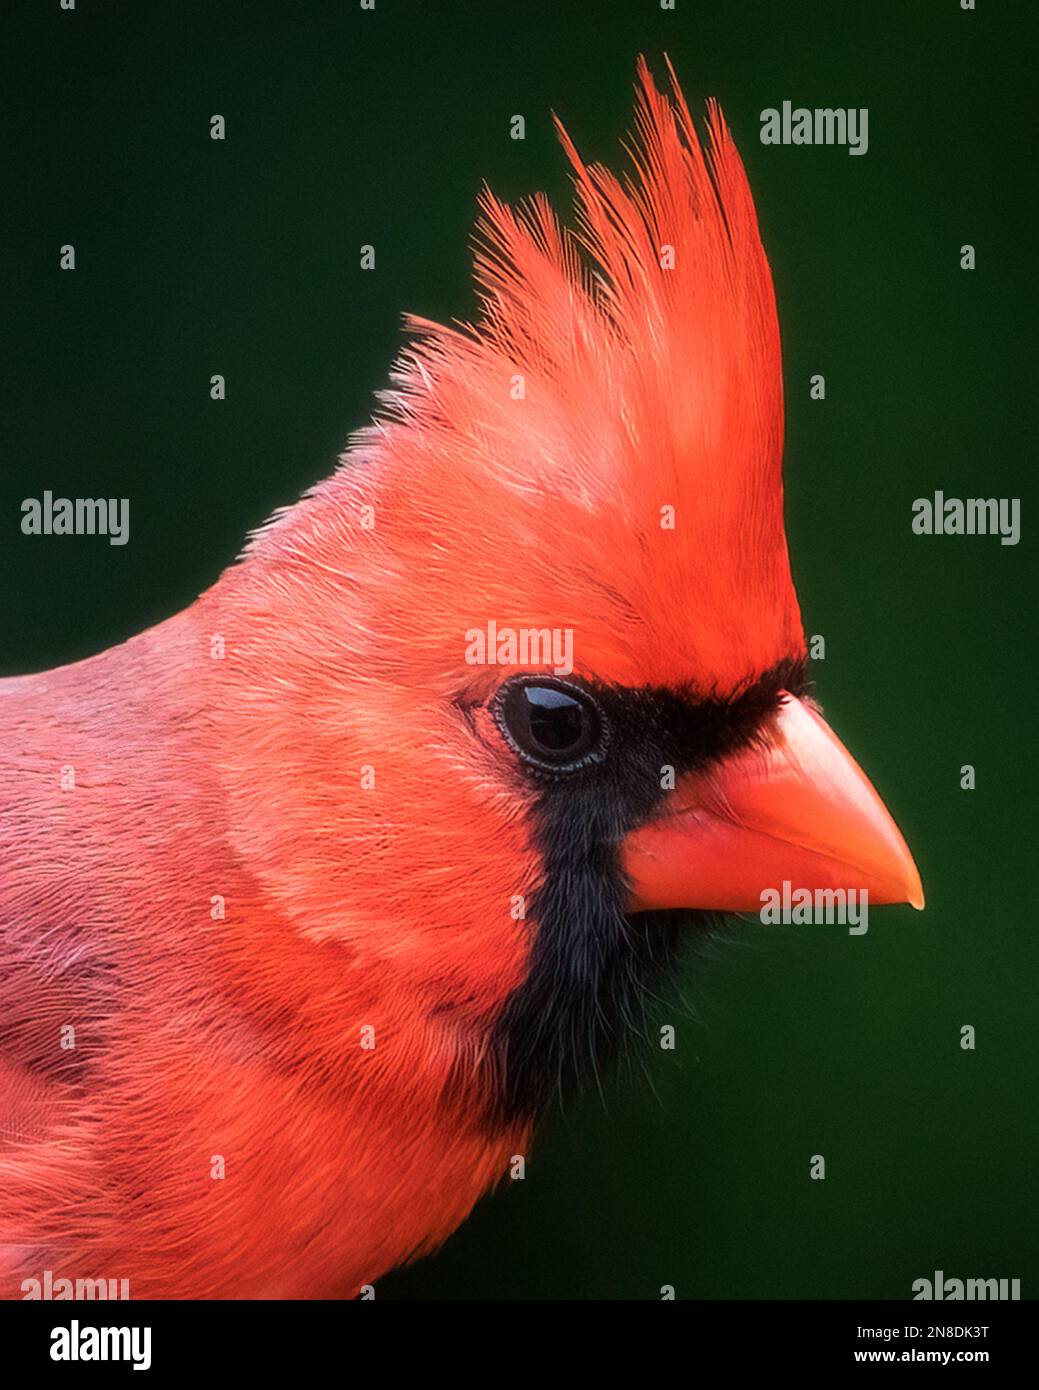 Red Northern Cardinal bird extreme closeup portrait Stock Photo